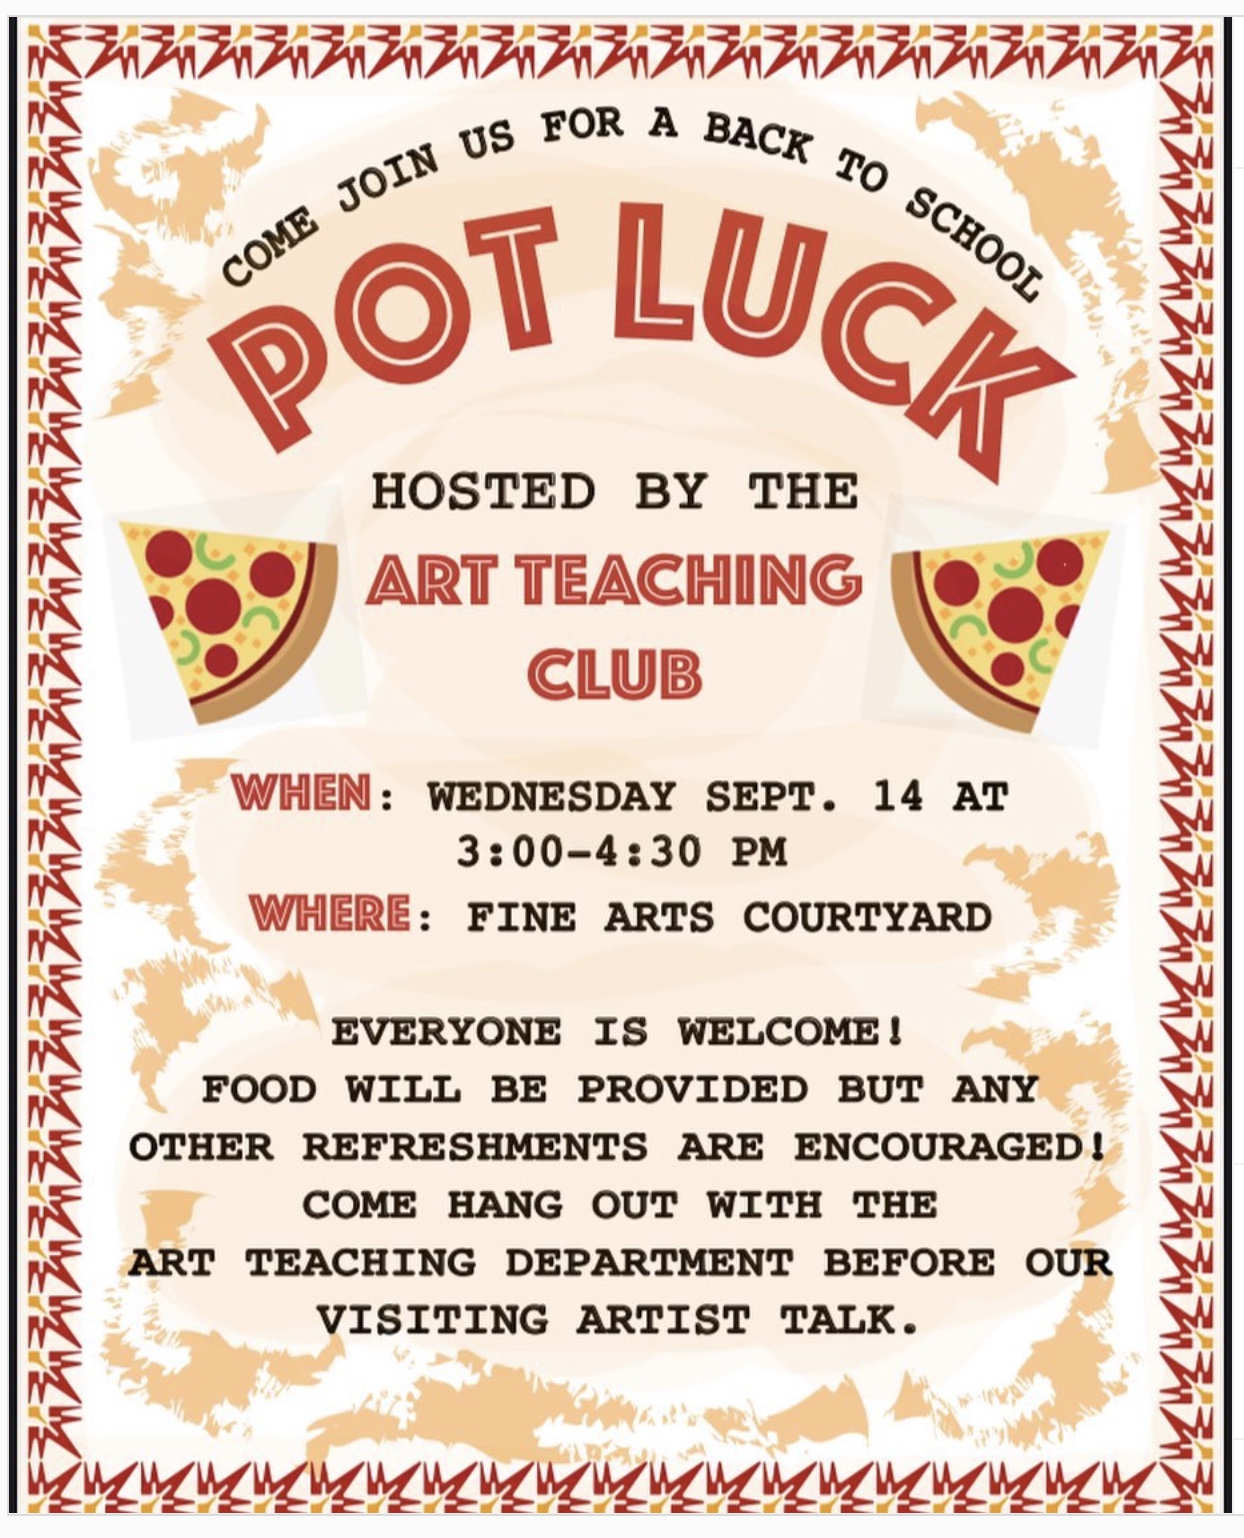 Art Teaching Potluck